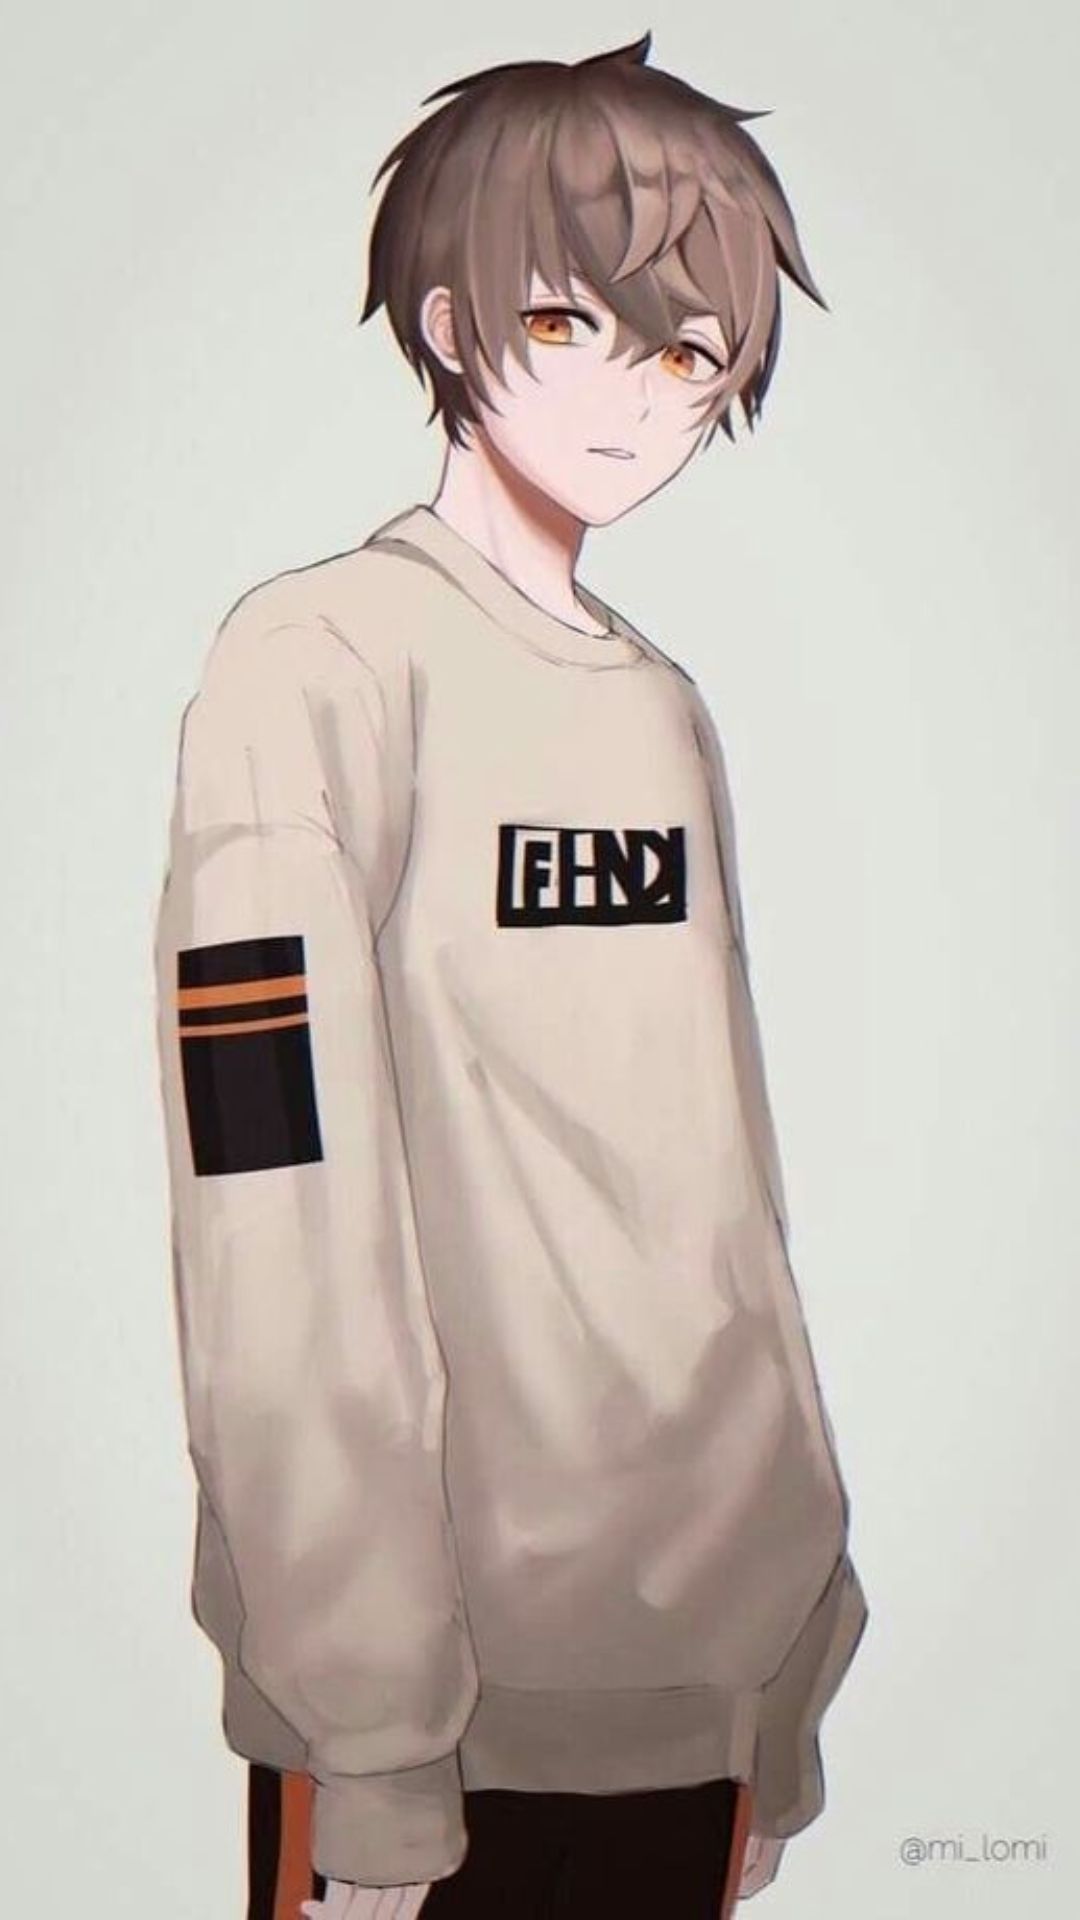 18+] Cute Manga Boy Wallpapers - WallpaperSafari